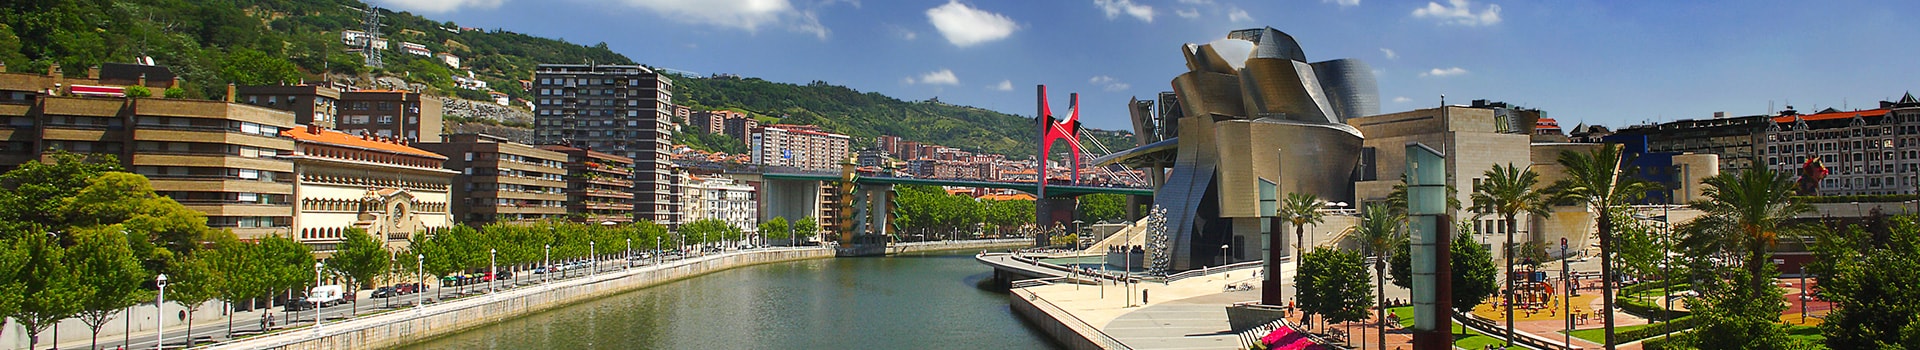 San Sebastian - Bilbao